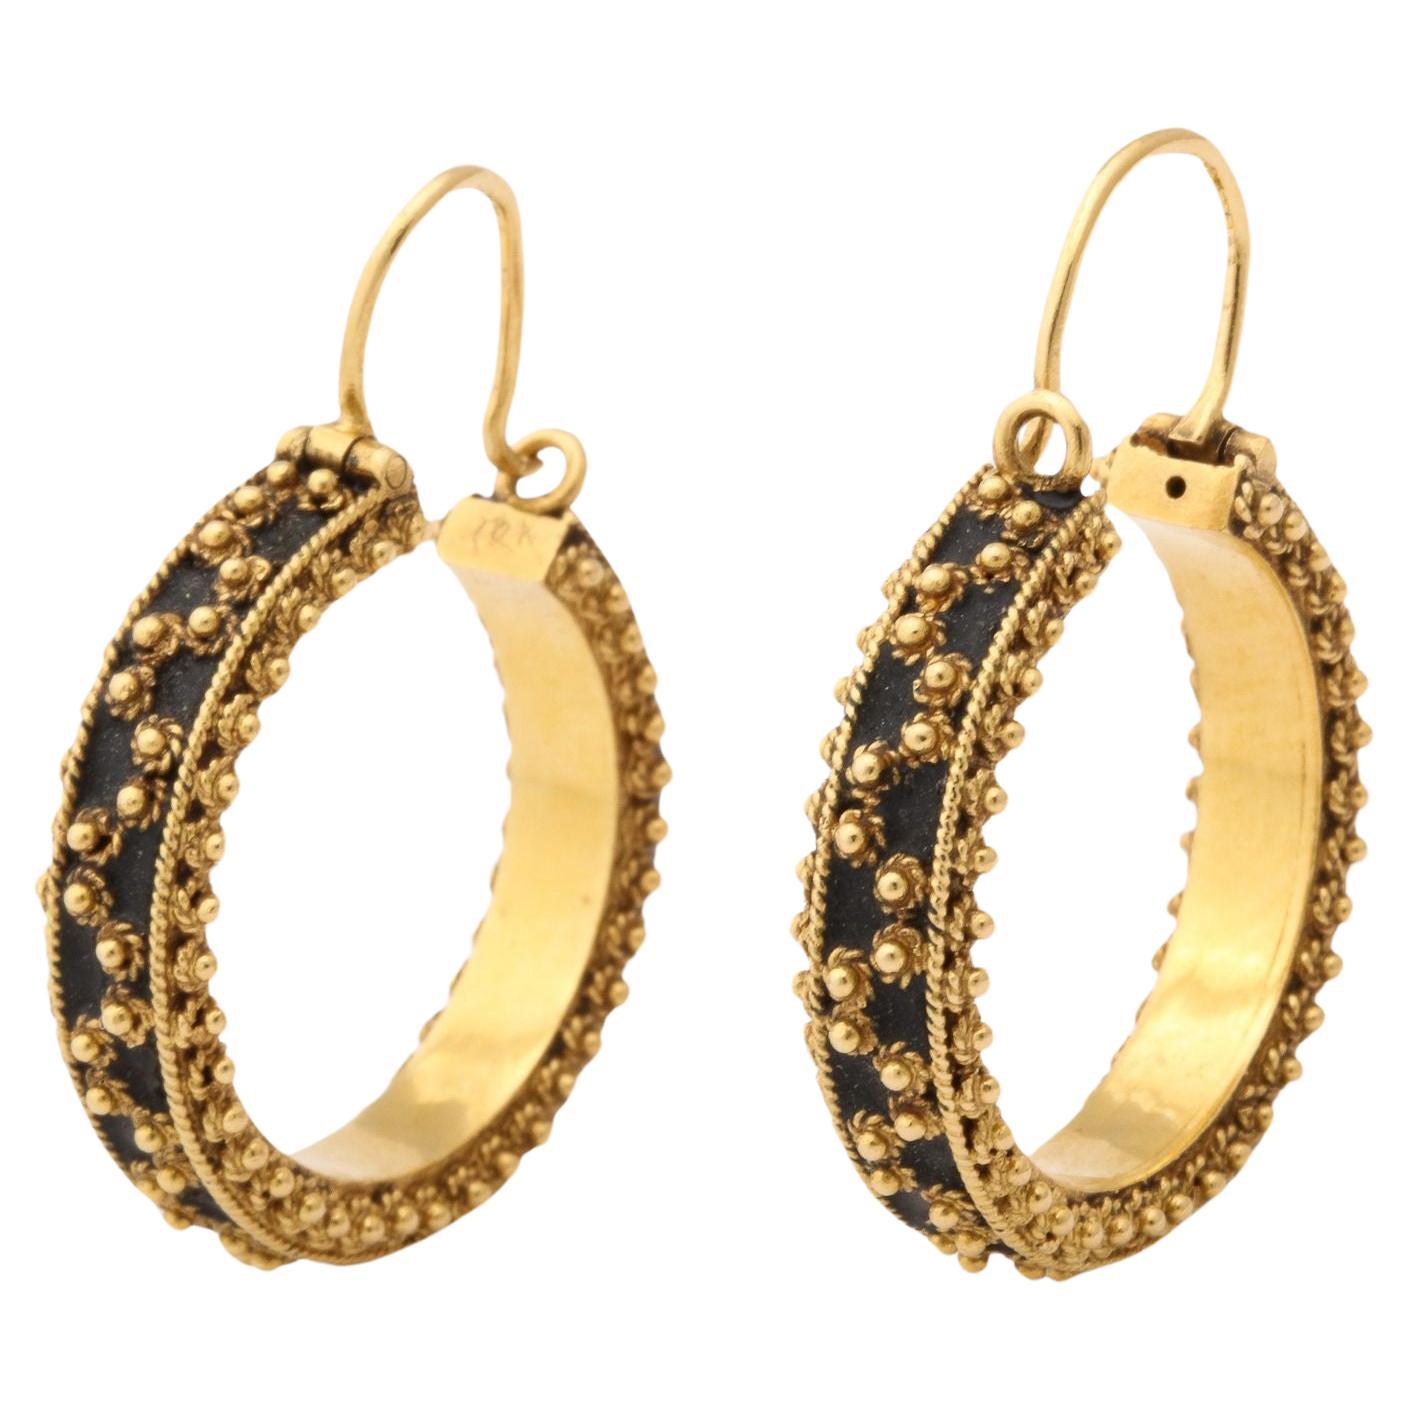 18 k Gold Articulated  Hoop Earrings With Bead Work